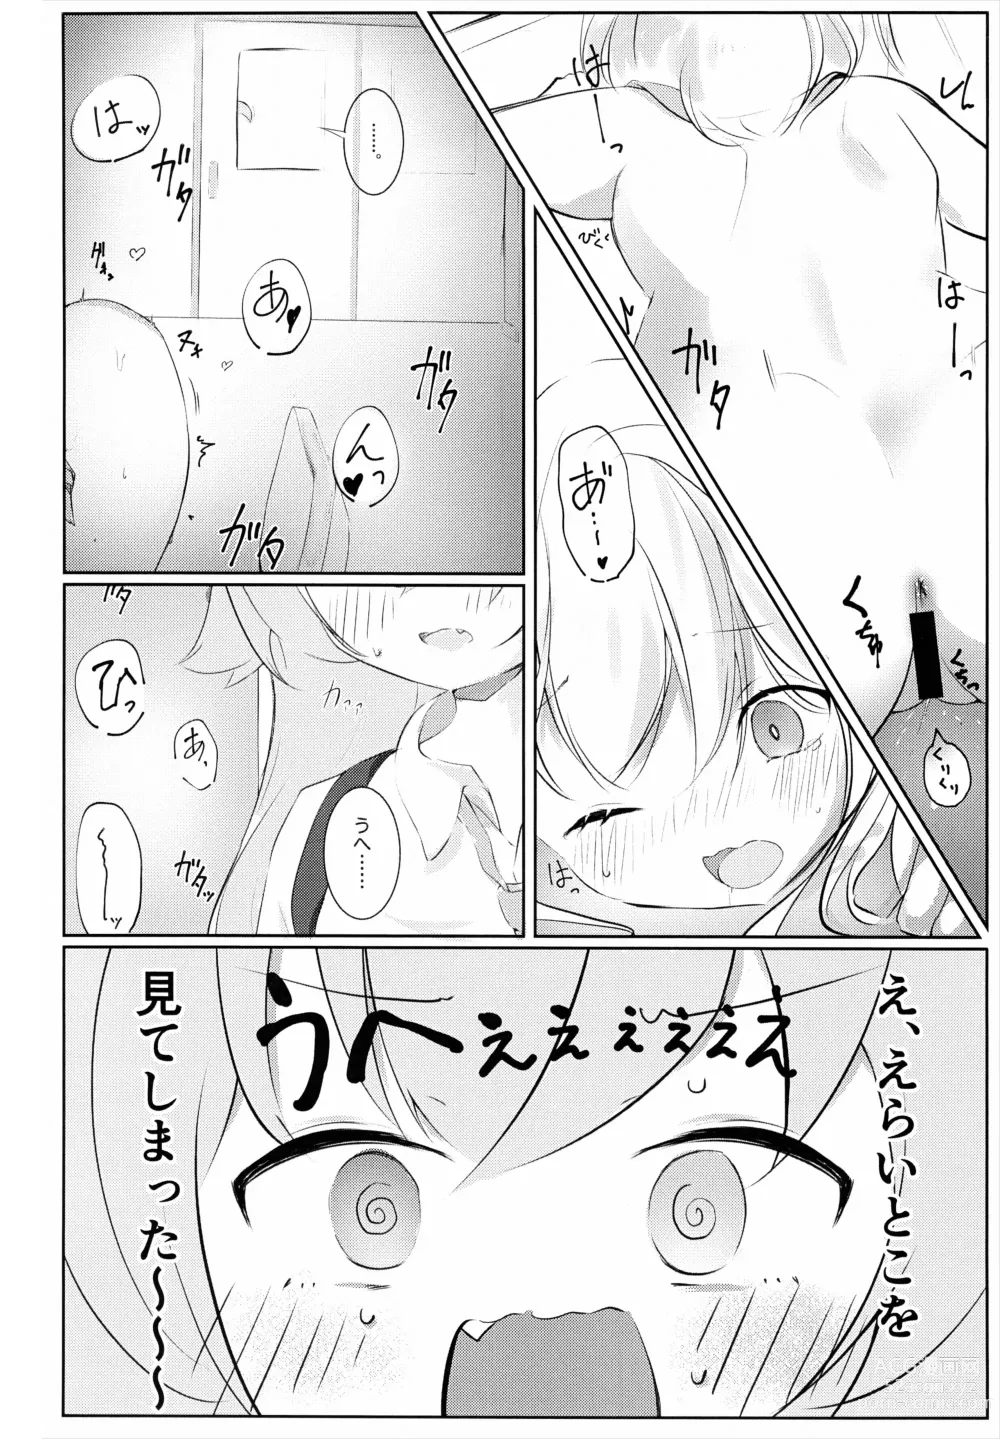 Page 9 of doujinshi Hakusyoku Aisei